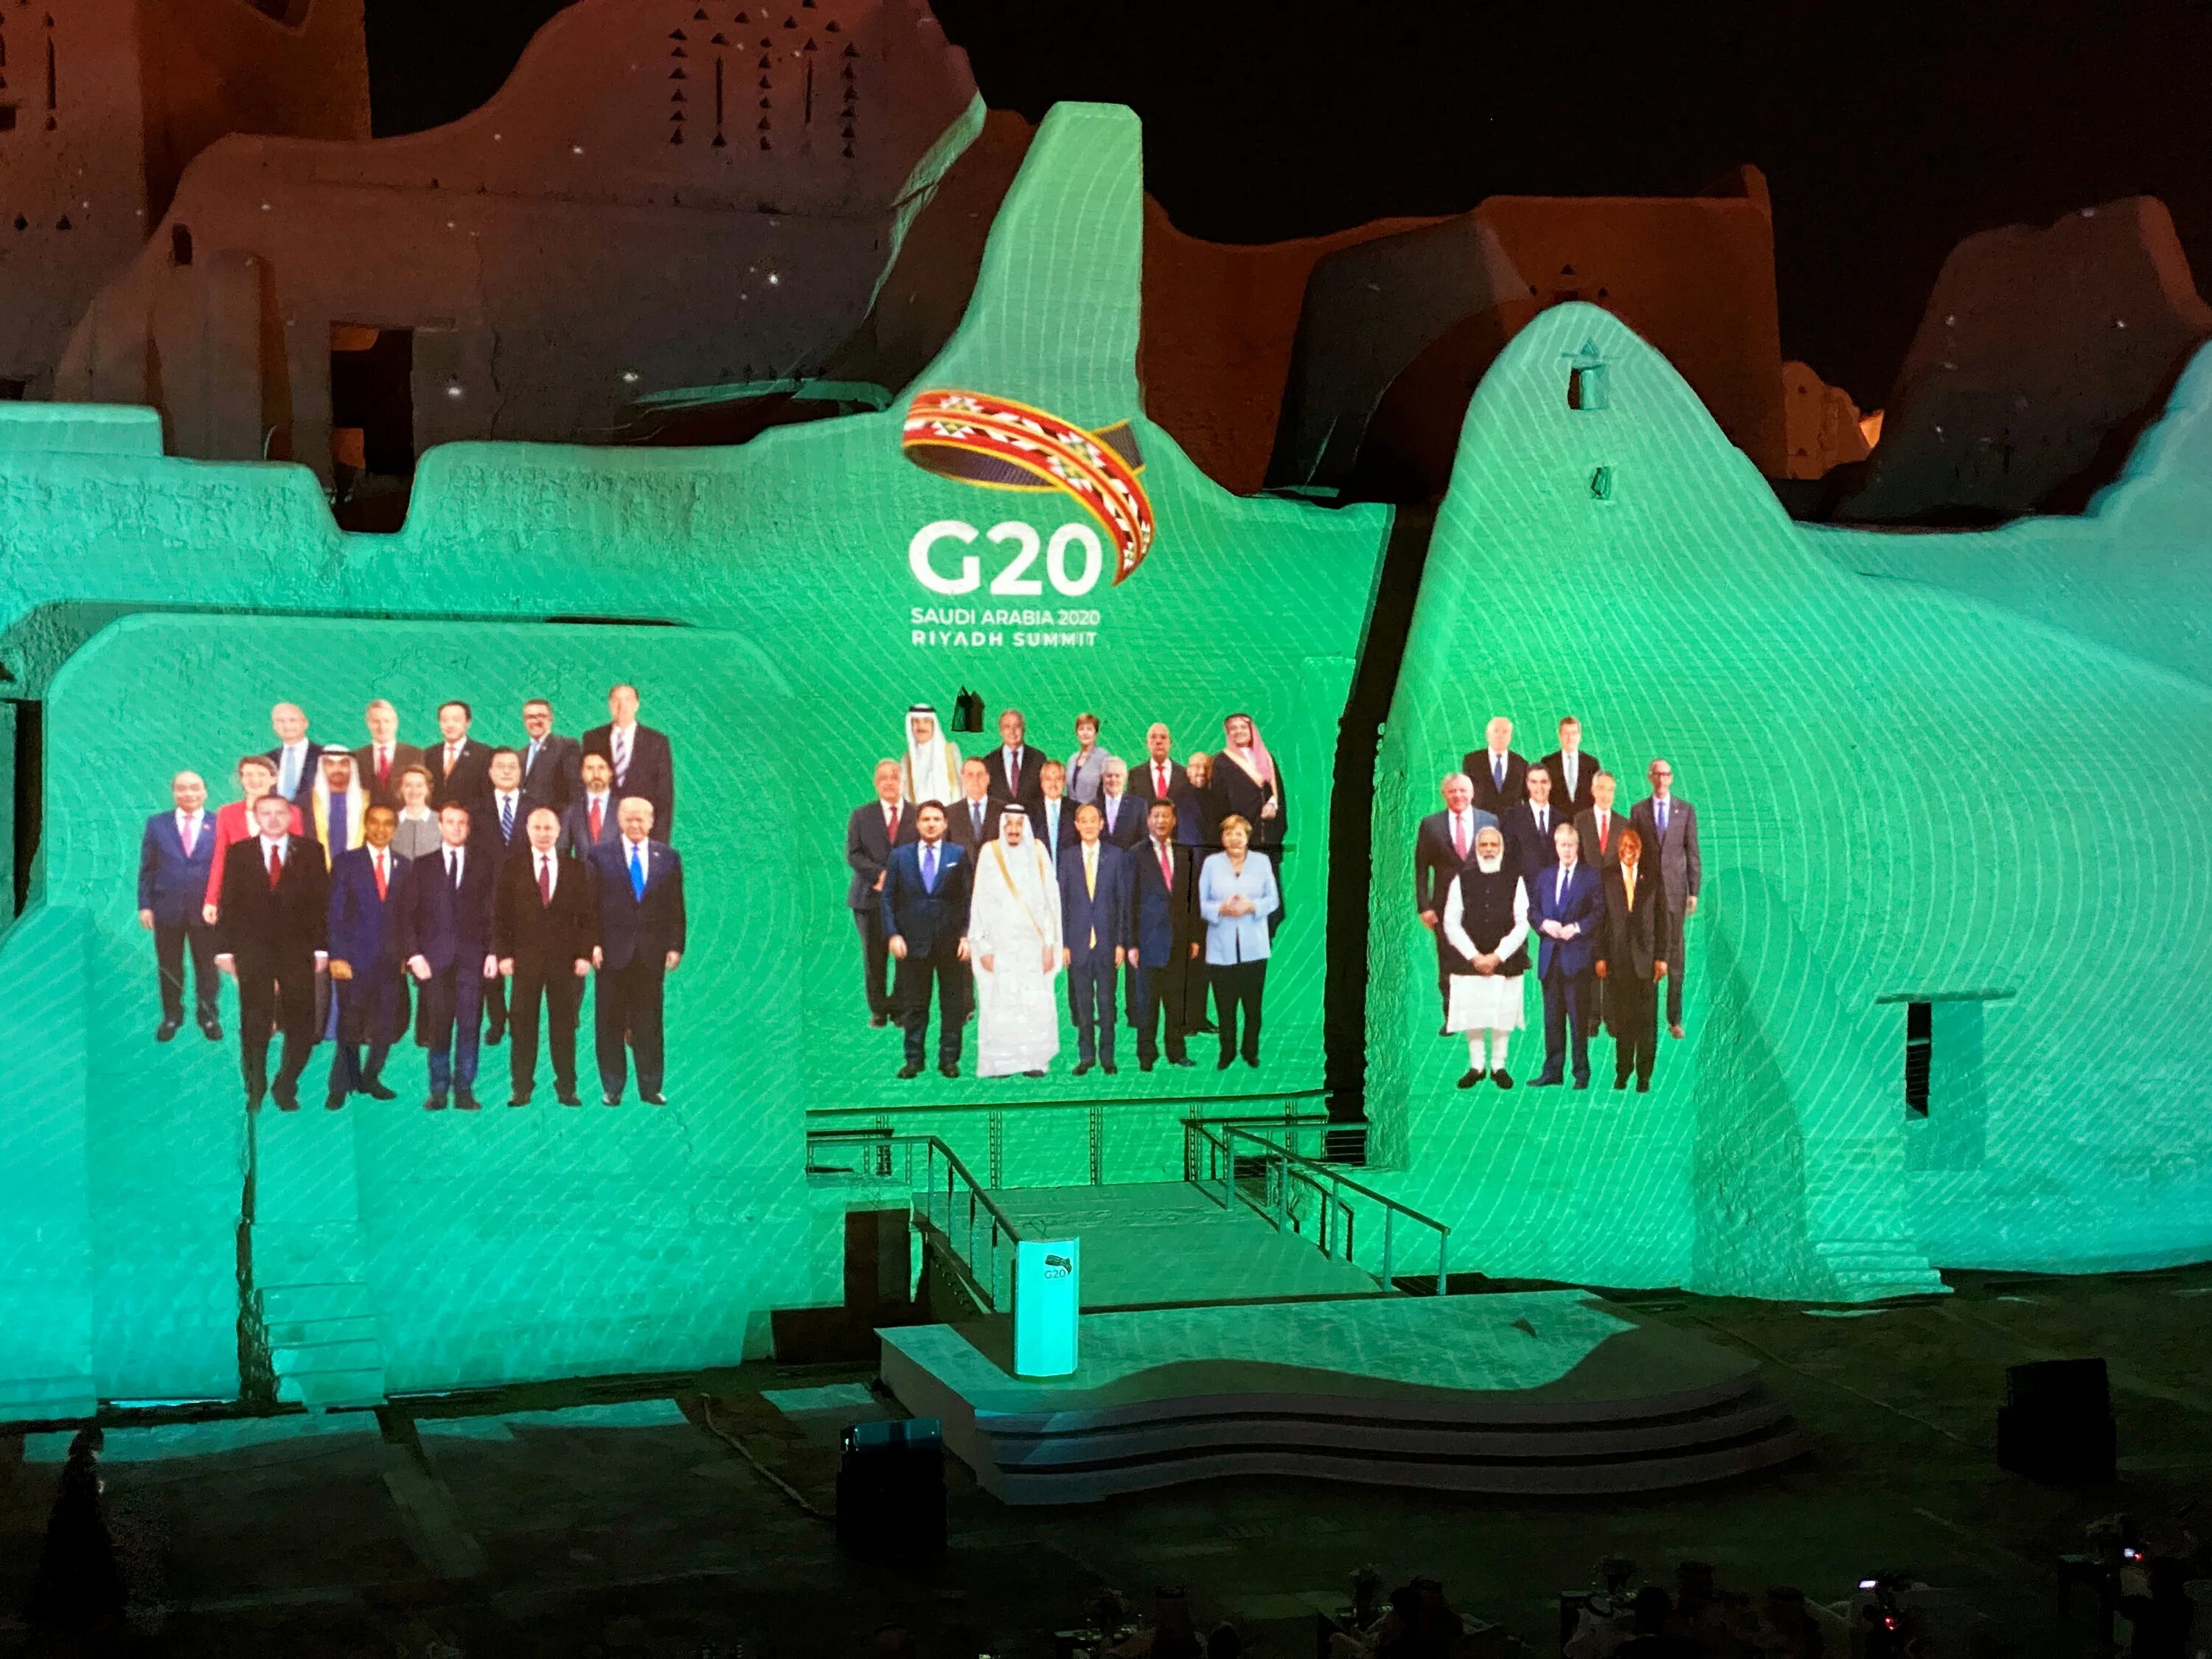 G20 Summit. G20 2021. Саммит g20 в Риме. Саммит g-20 в Риме (2021). Почему саммит